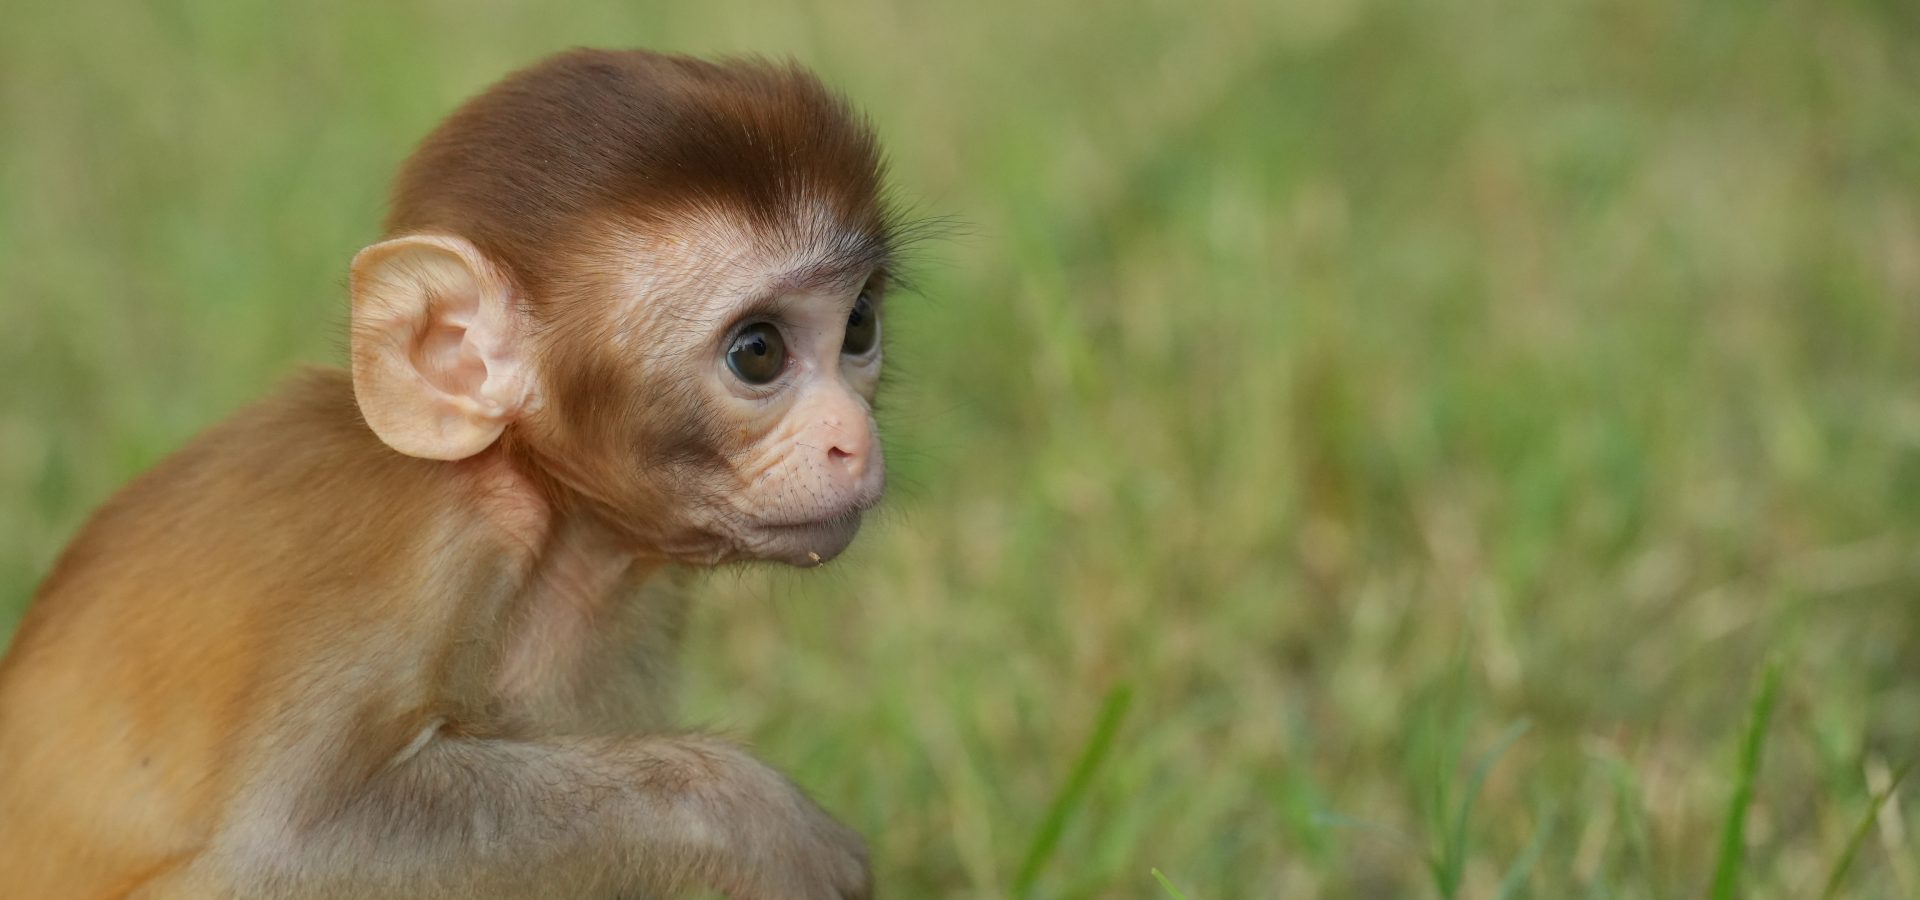 Hand-Rearing Baby Monkeys: Abu-Zoey's Life At Wildlife SOS - Wildlife SOS